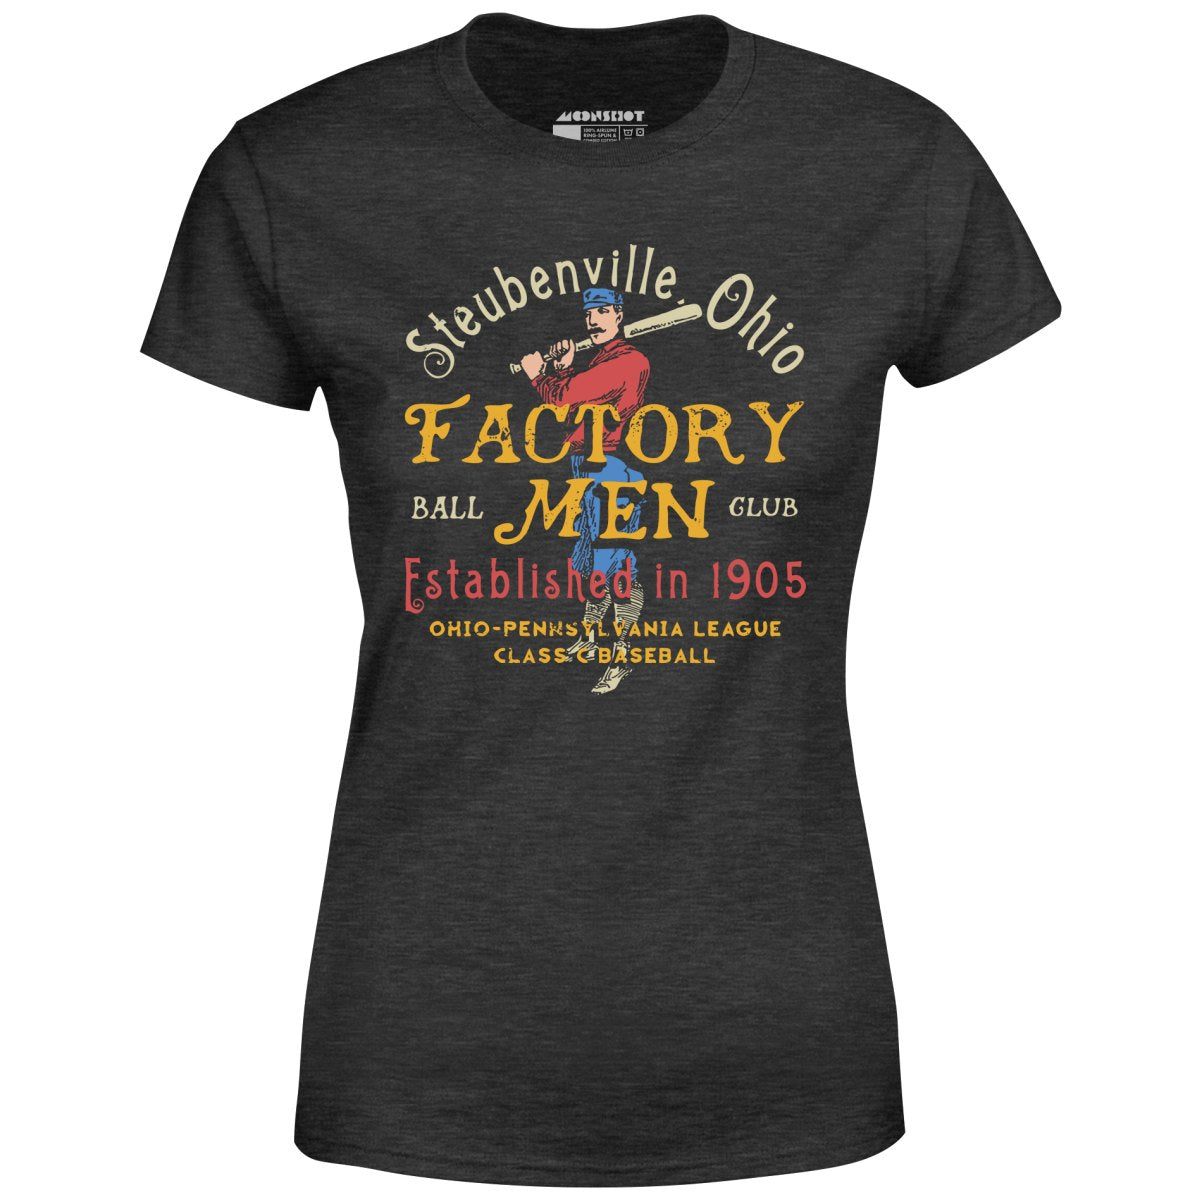 Steubenville Factory Men - Ohio - Vintage Defunct Baseball Teams - Women's T-Shirt